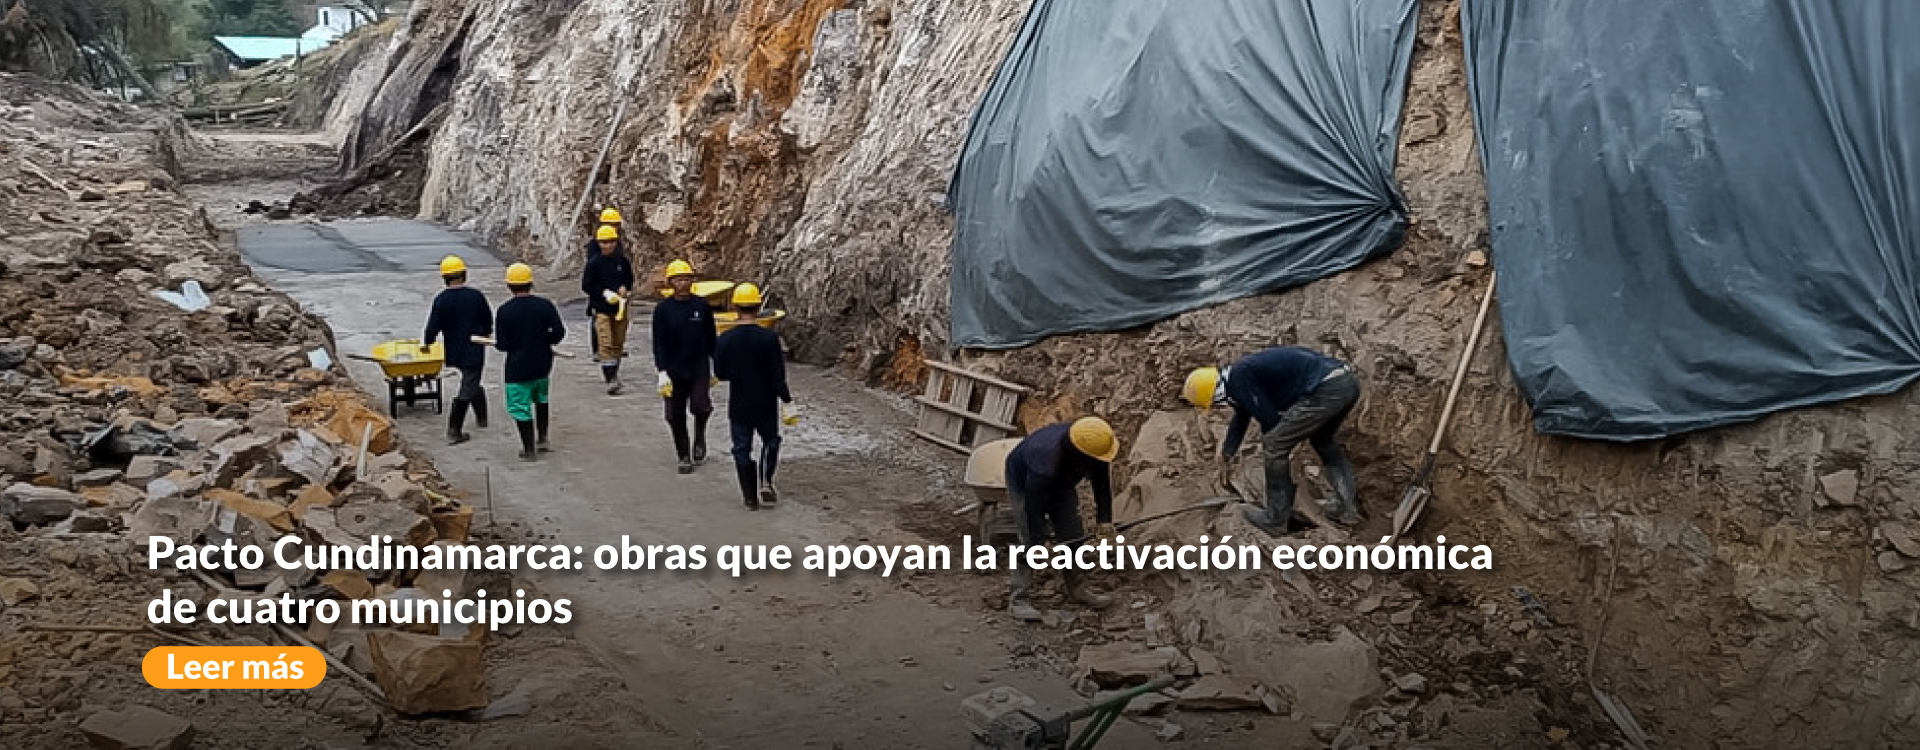 Pacto Cundinamarca: obras que apoyan la reactivación económica de cuatro municipios